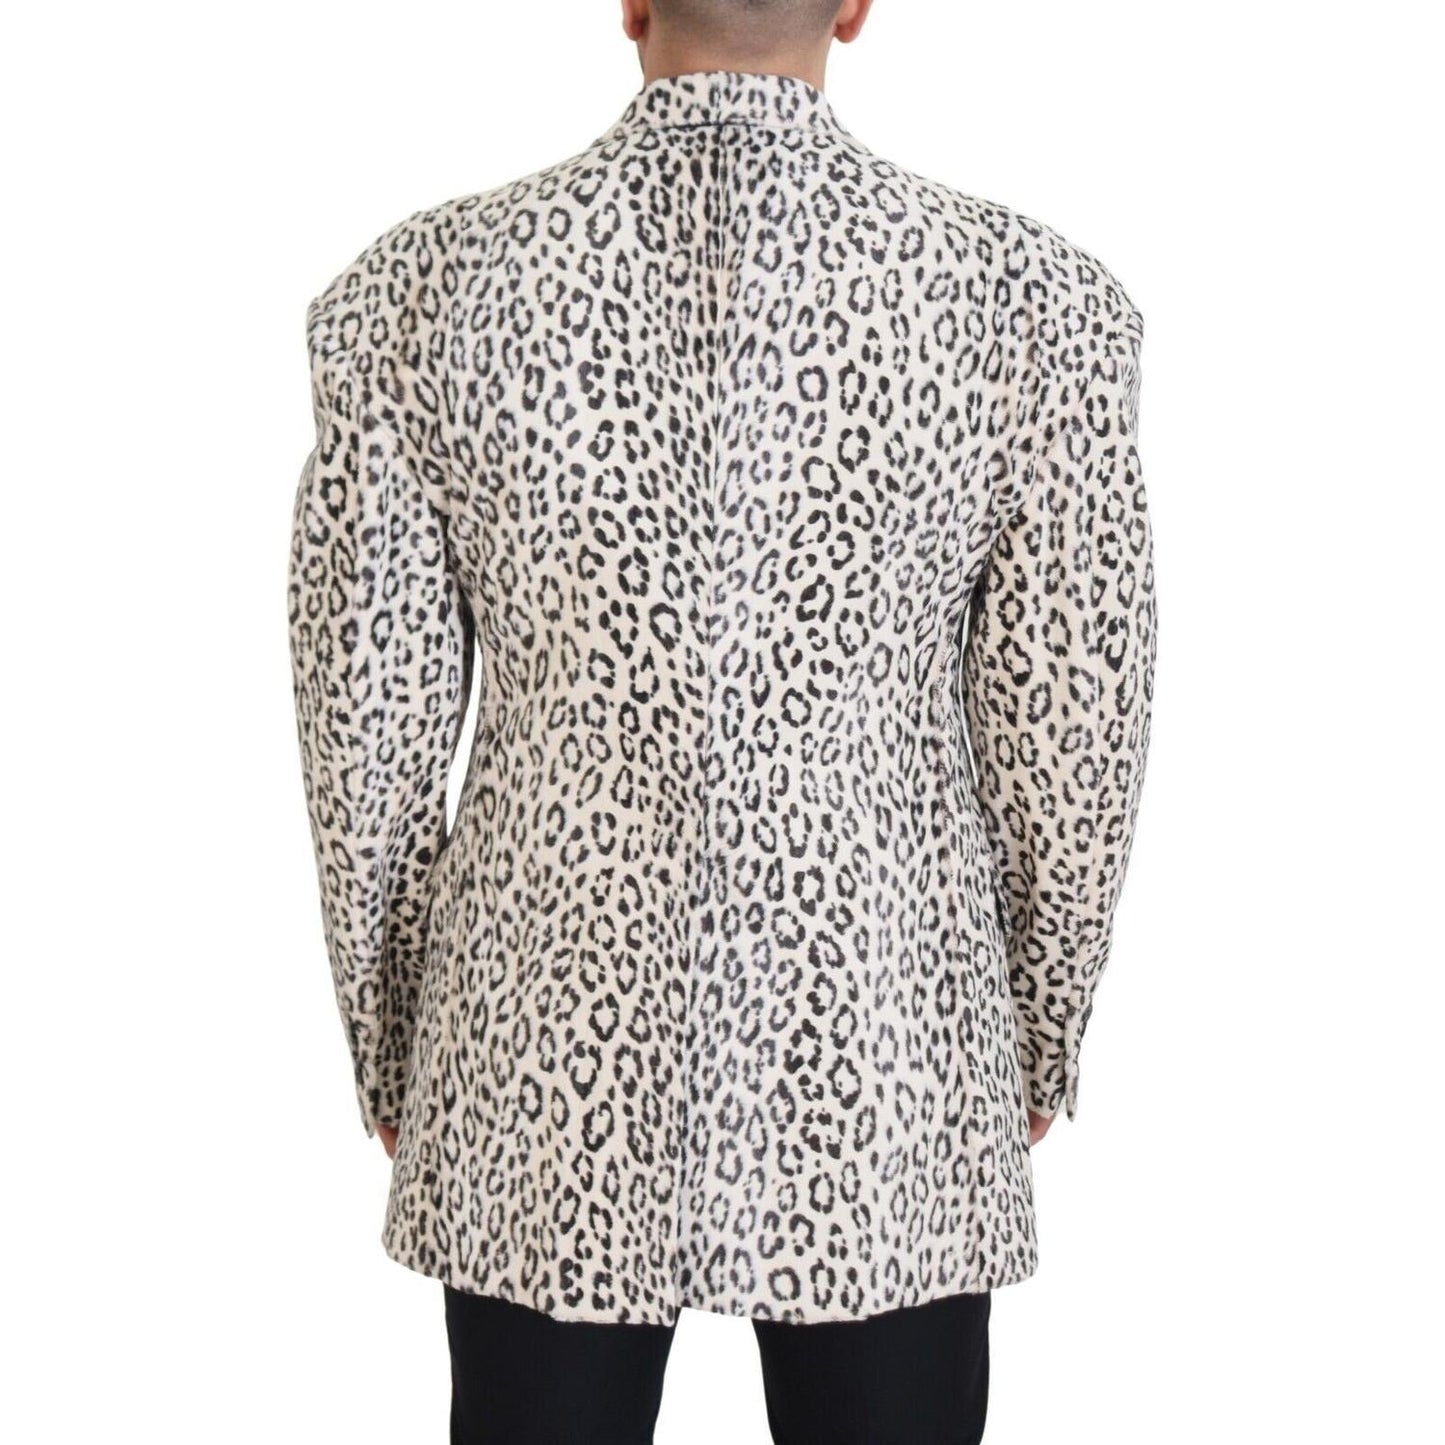 Dolce & Gabbana Elegant White Slim-Fit Blazer white-leopard-single-breasted-coat-blazer